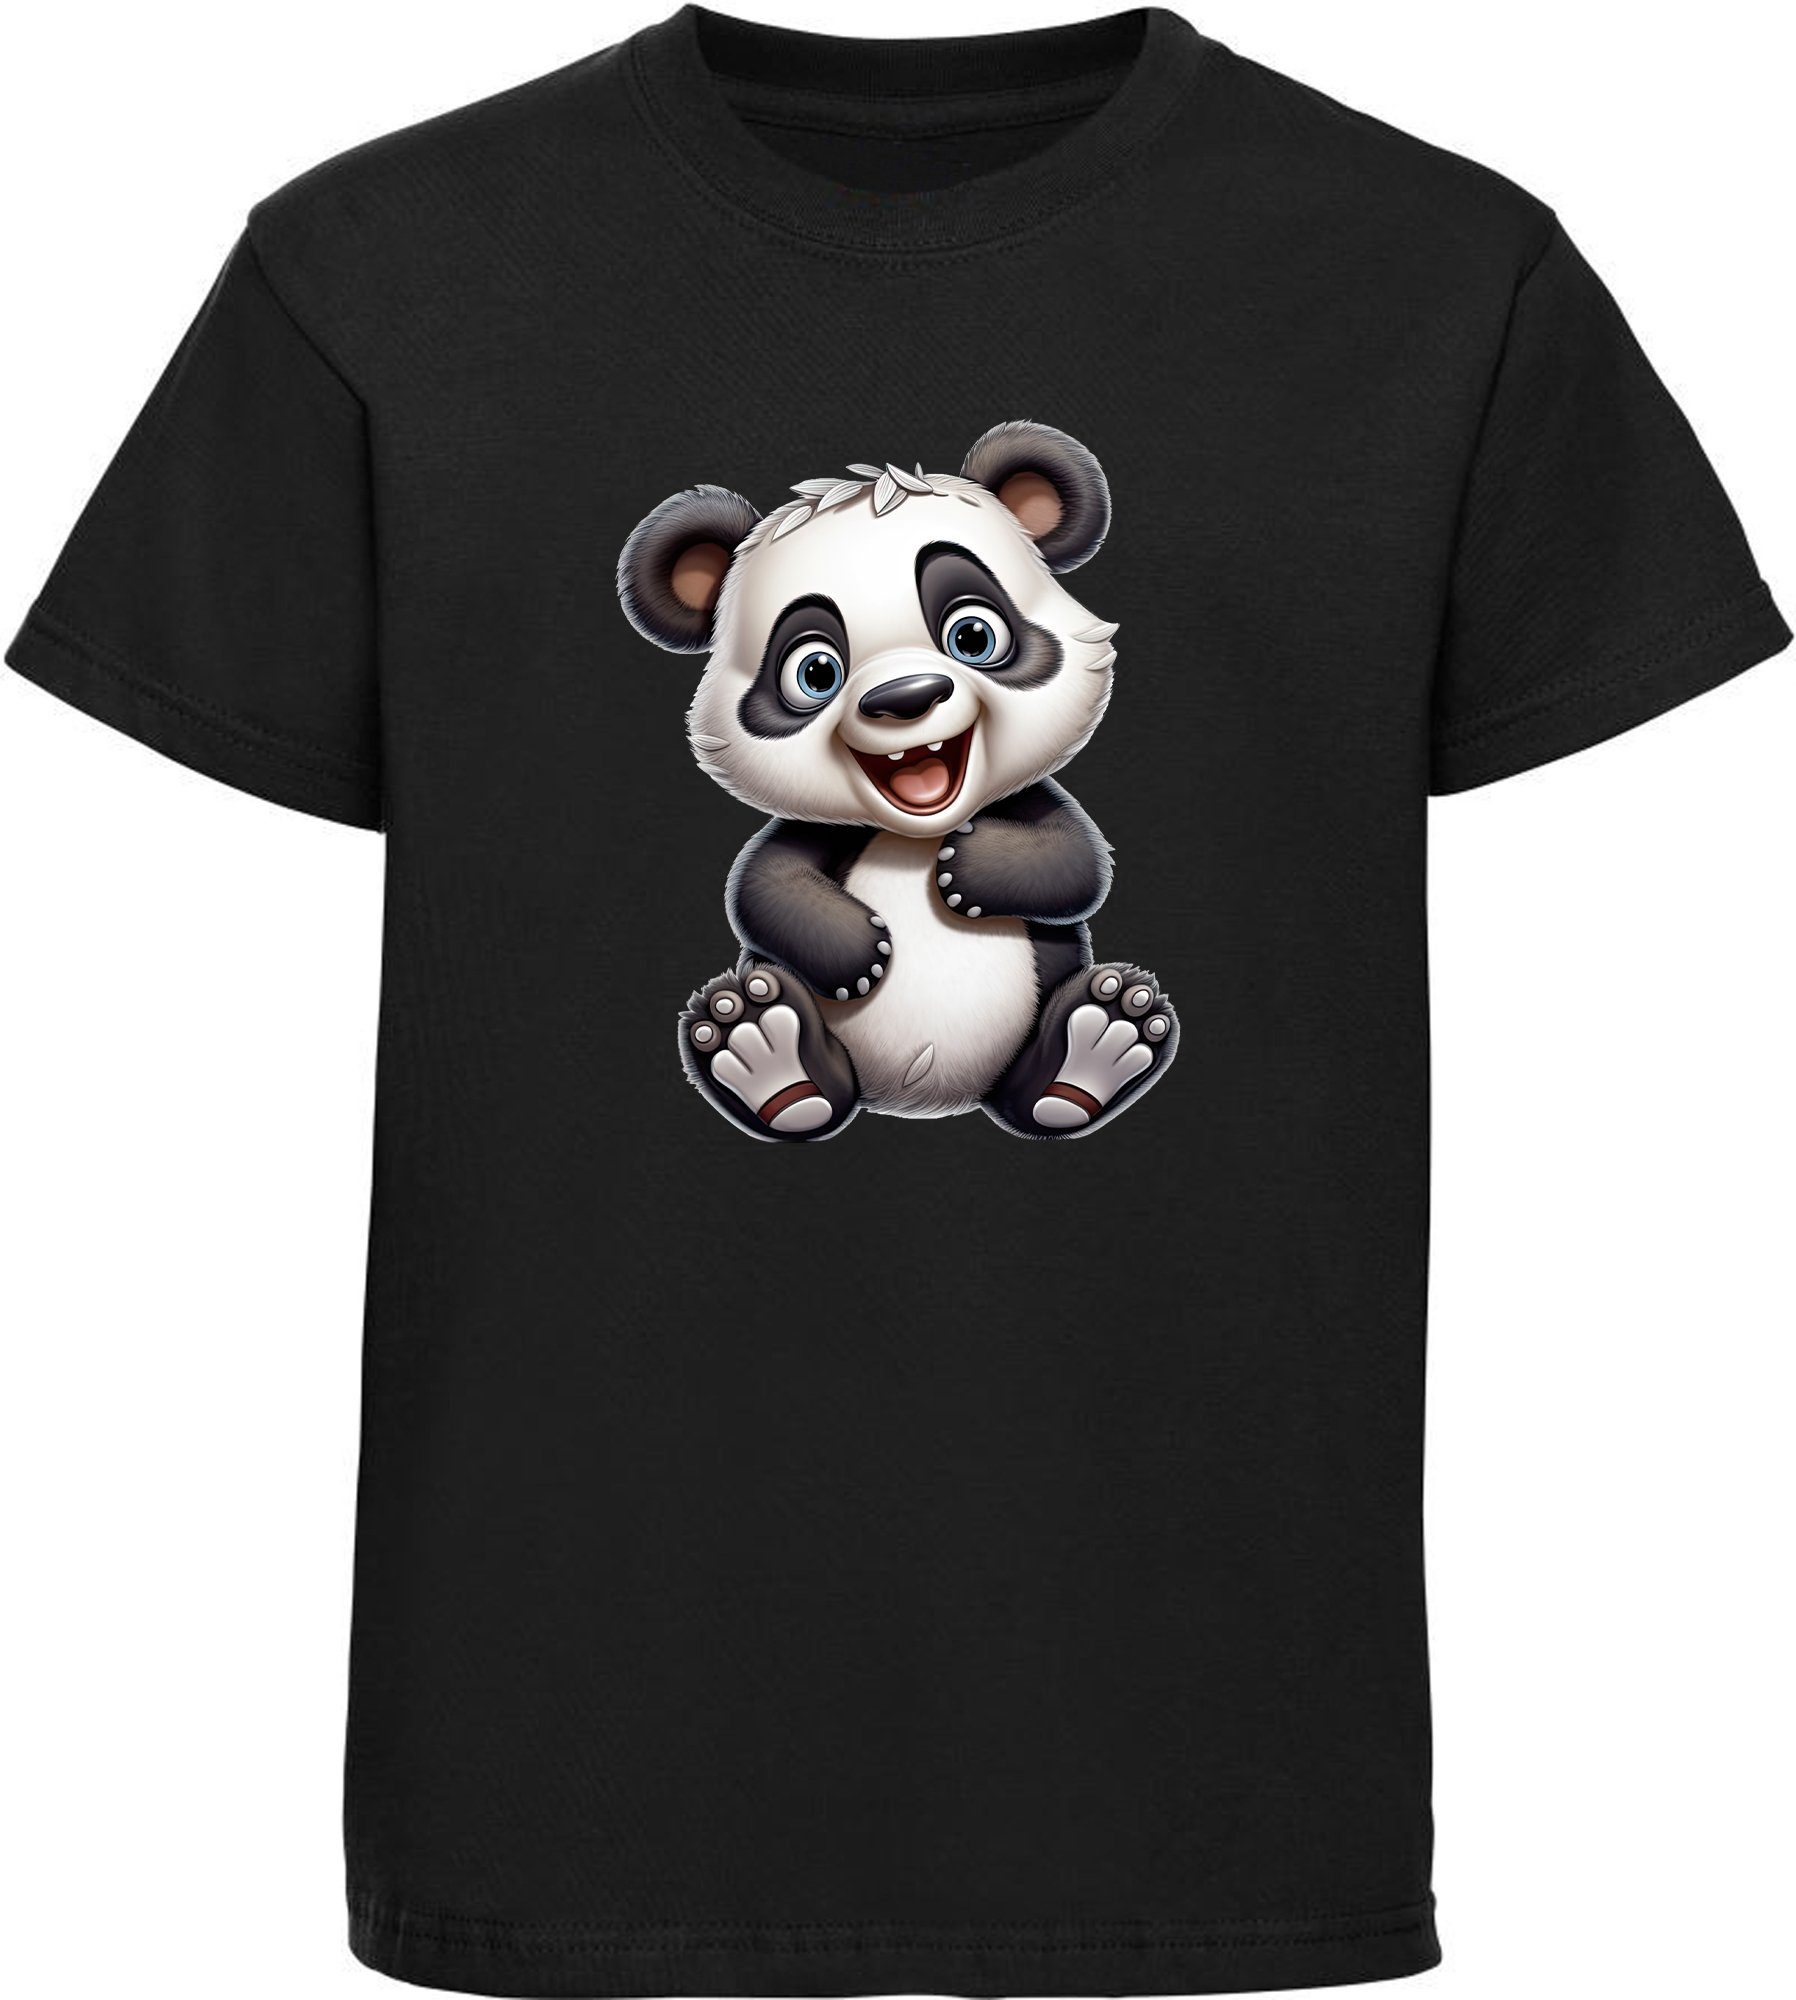 MyDesign24 T-Shirt Kinder Wildtier Print Shirt bedruckt - Baby Panda Bär Baumwollshirt mit Aufdruck, i277 schwarz | T-Shirts